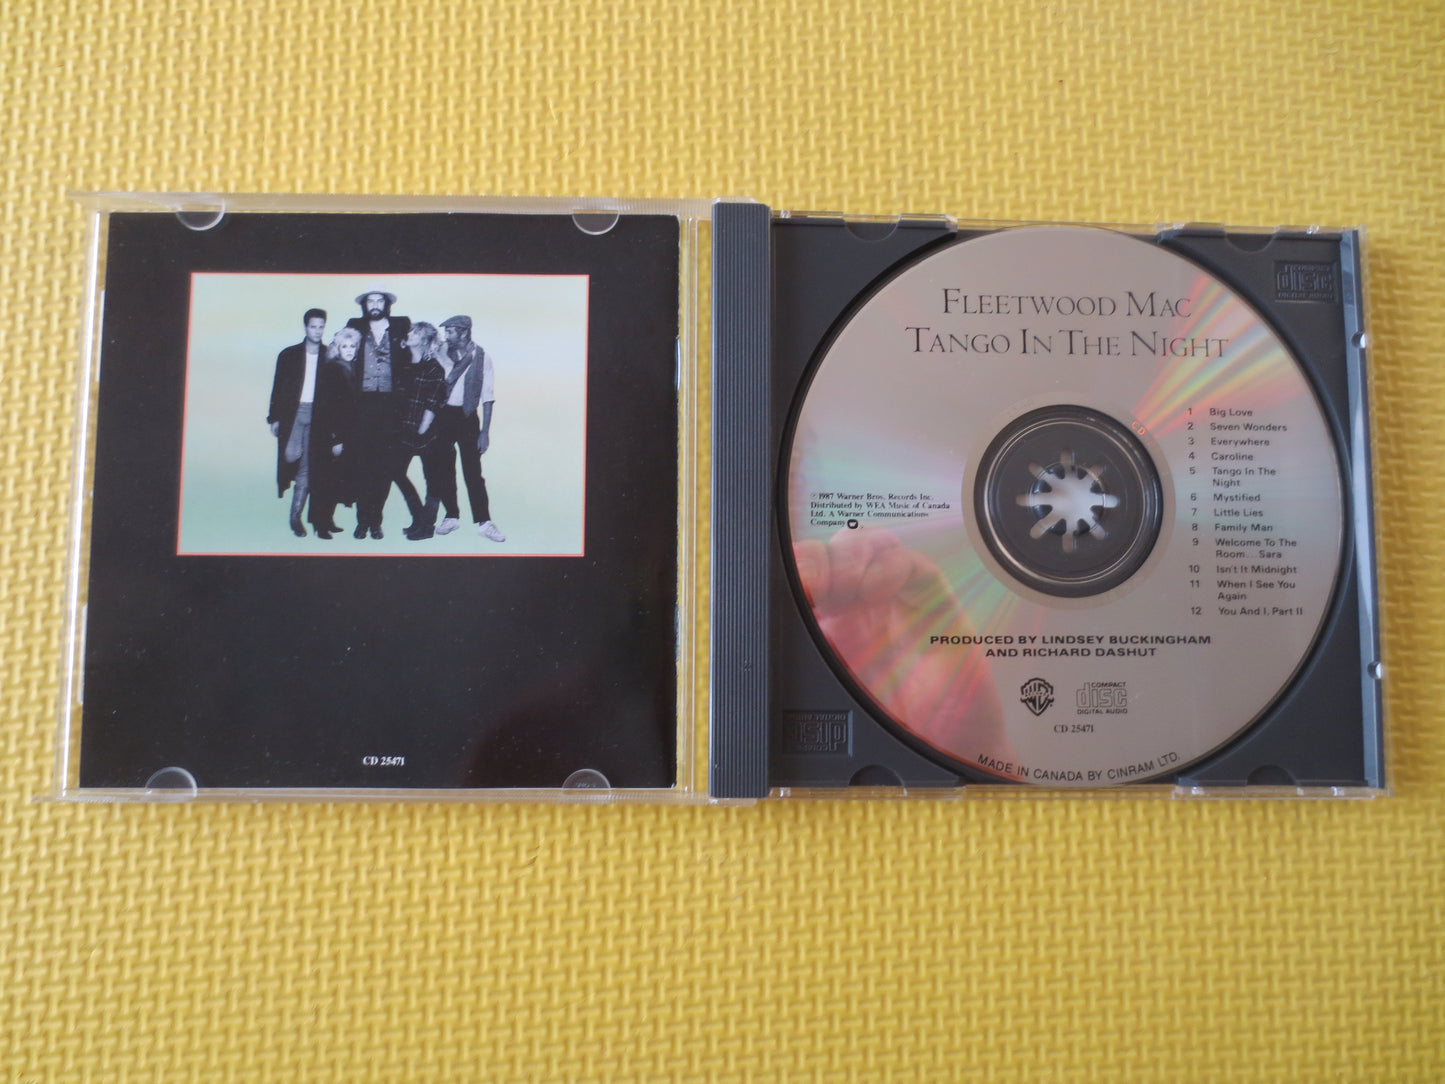 FLEETWOOD MAC, TANGO in the Night, Fleetwood Mac Cd, Rock Albums, Fleetwood Mac Album, Fleetwood Mac Lp, Cds, 1987 Compact Disc